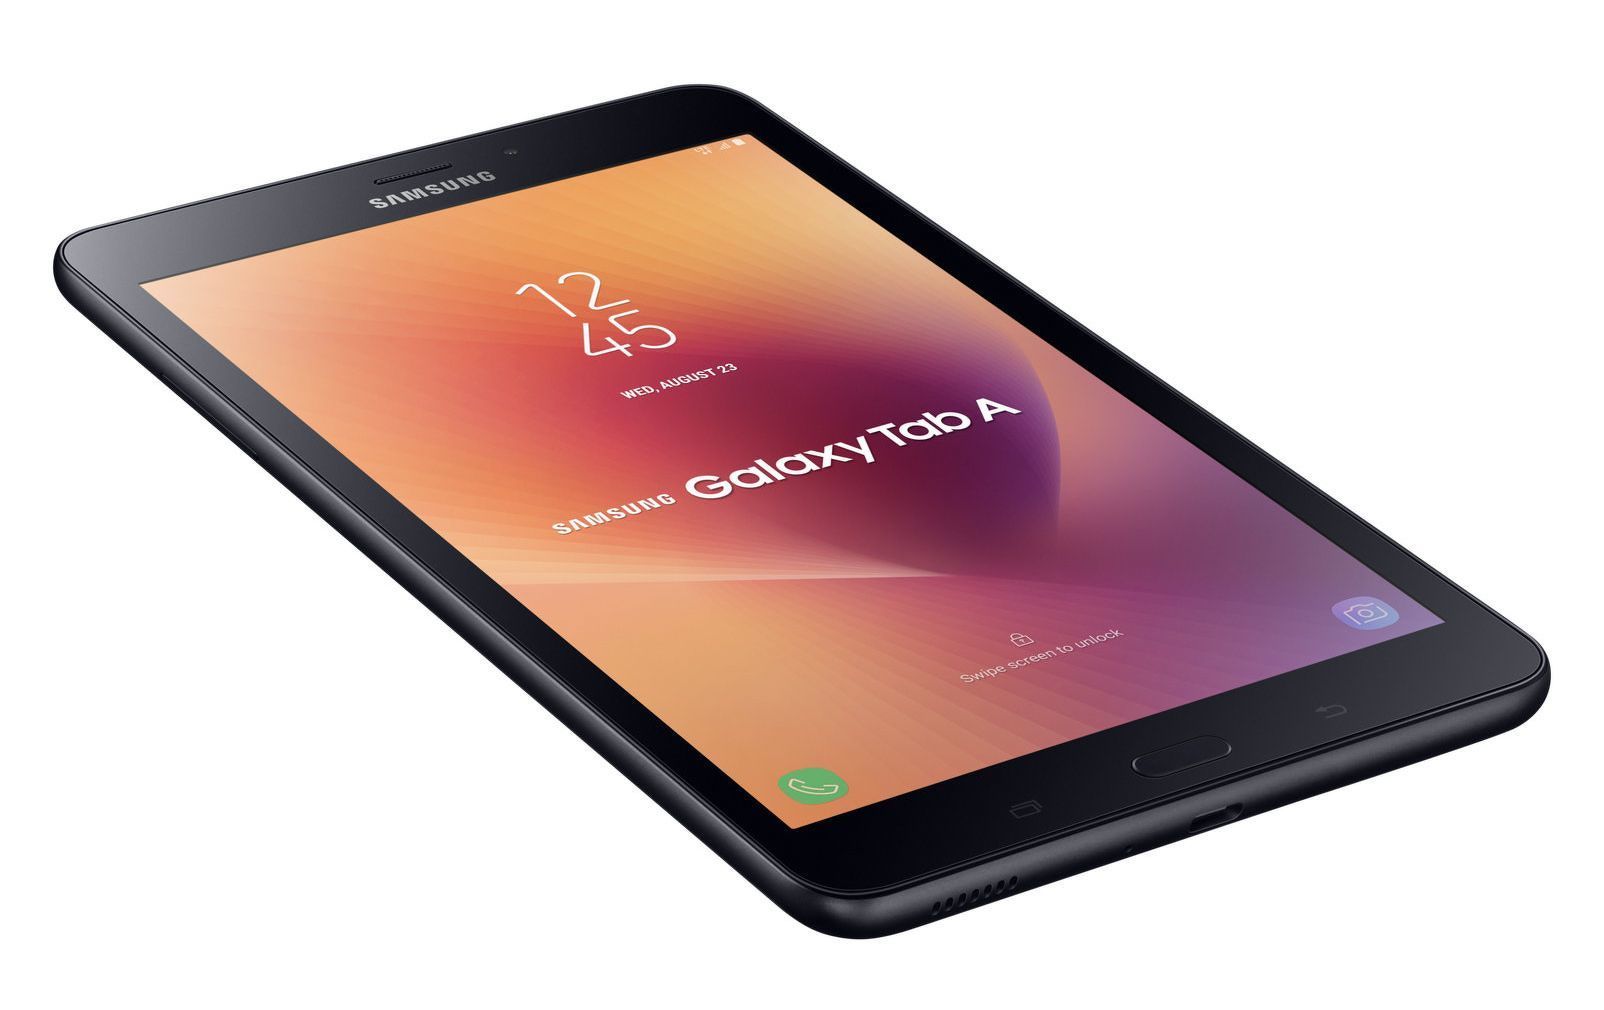 Samsung Galaxy Tab A 8.0 (2017) – Full tablet specifications